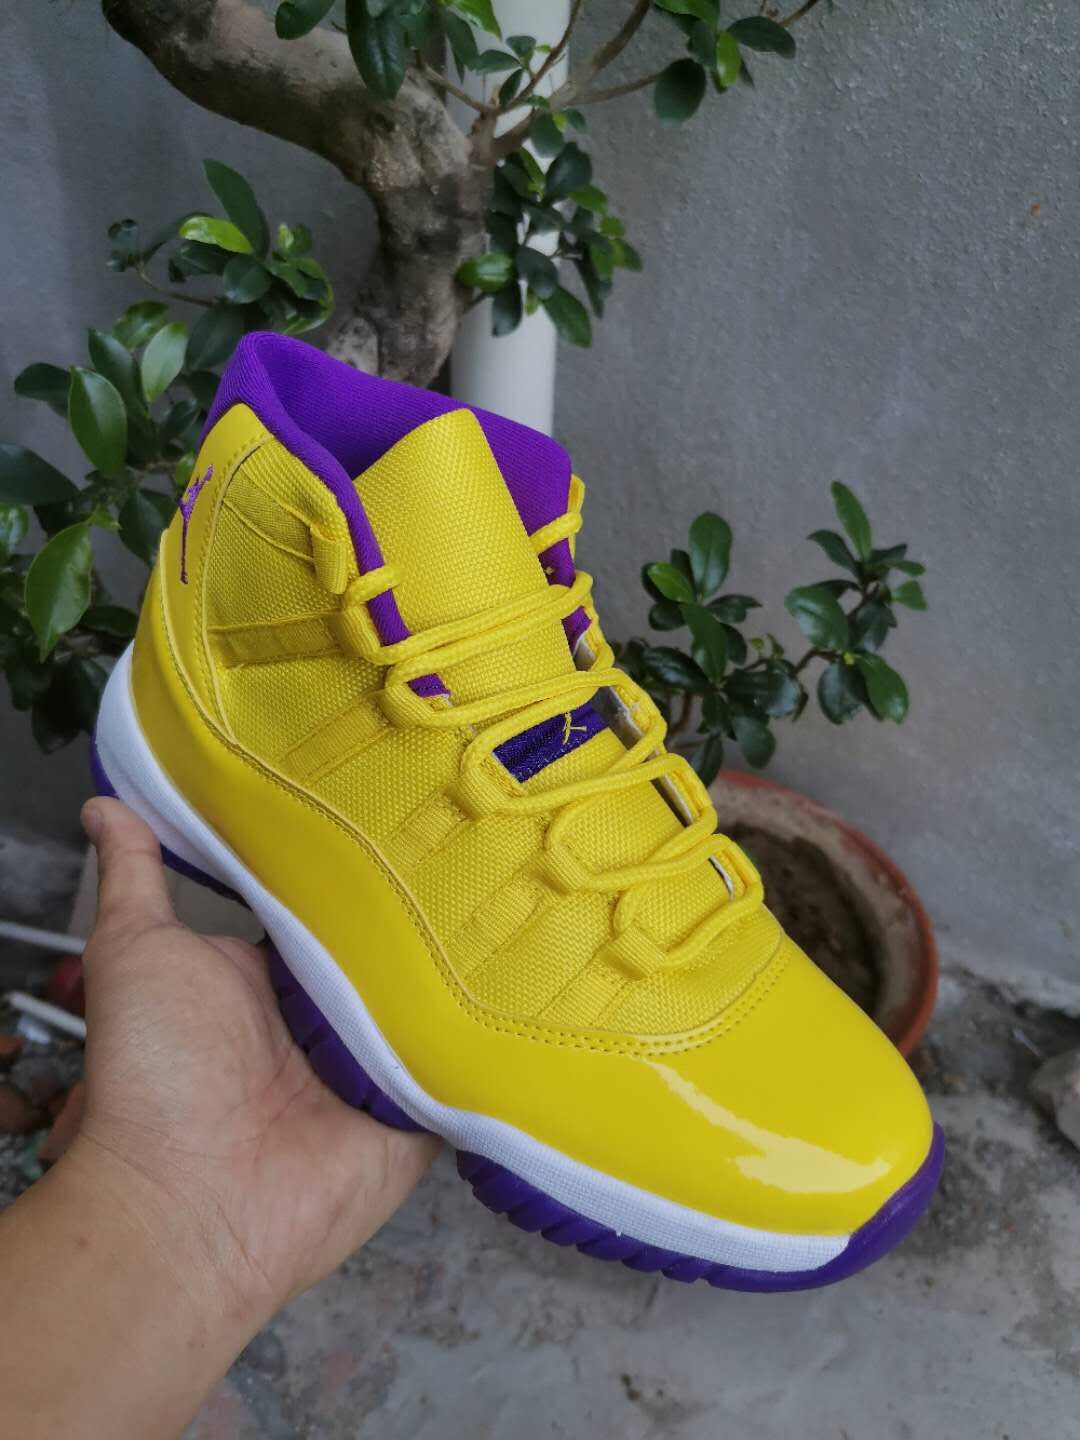 yellow and purple jordan 11